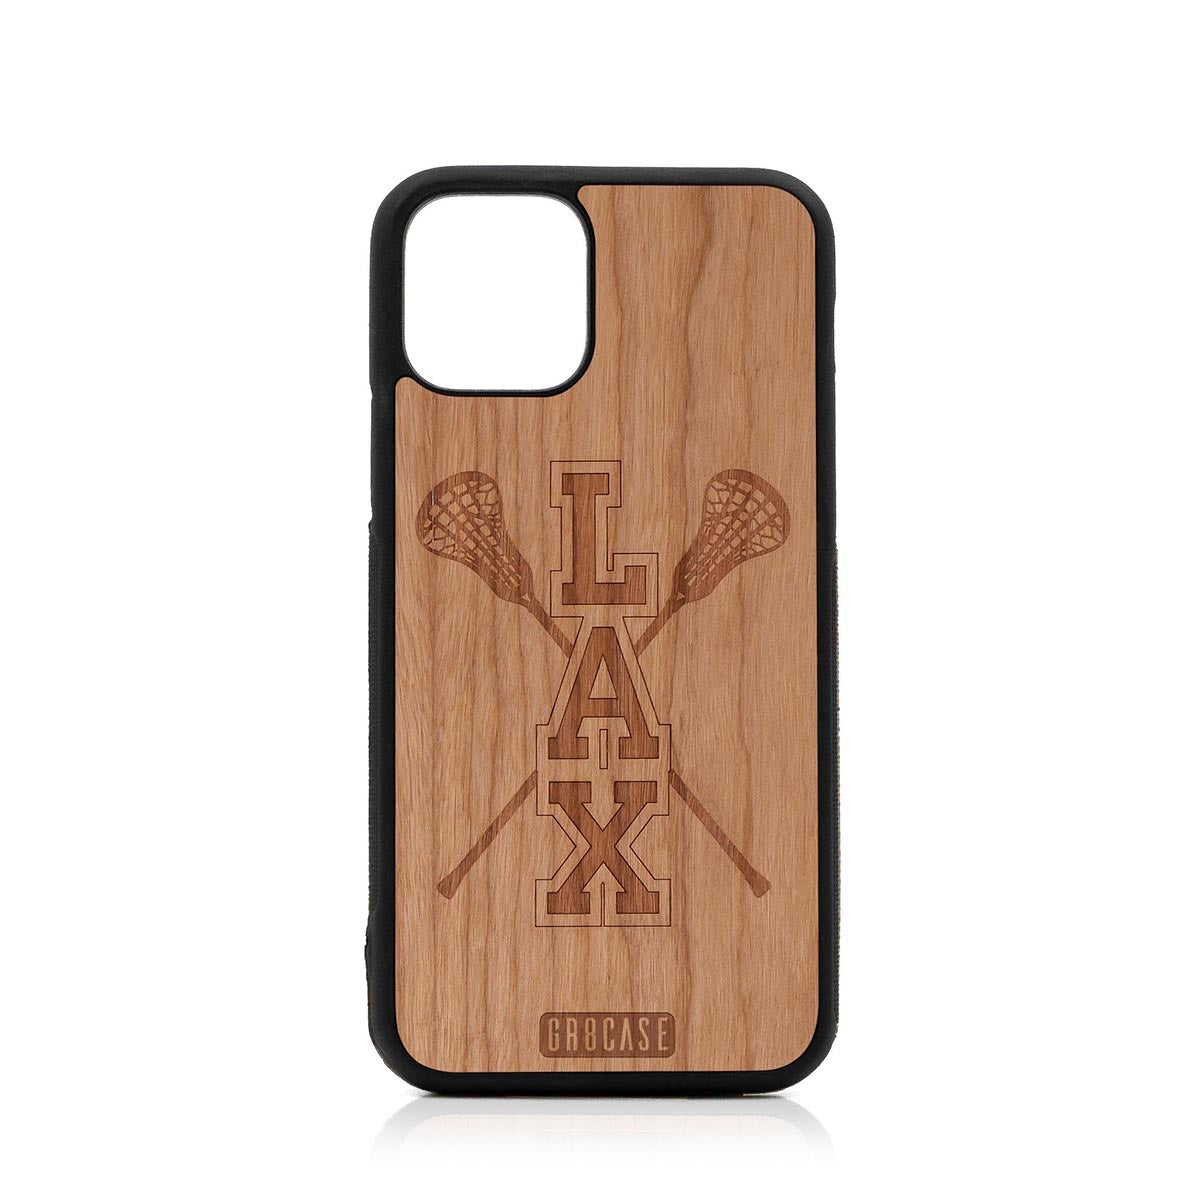 Lacrosse (LAX) Sticks Design Wood Case For iPhone 11 Pro by GR8CASE